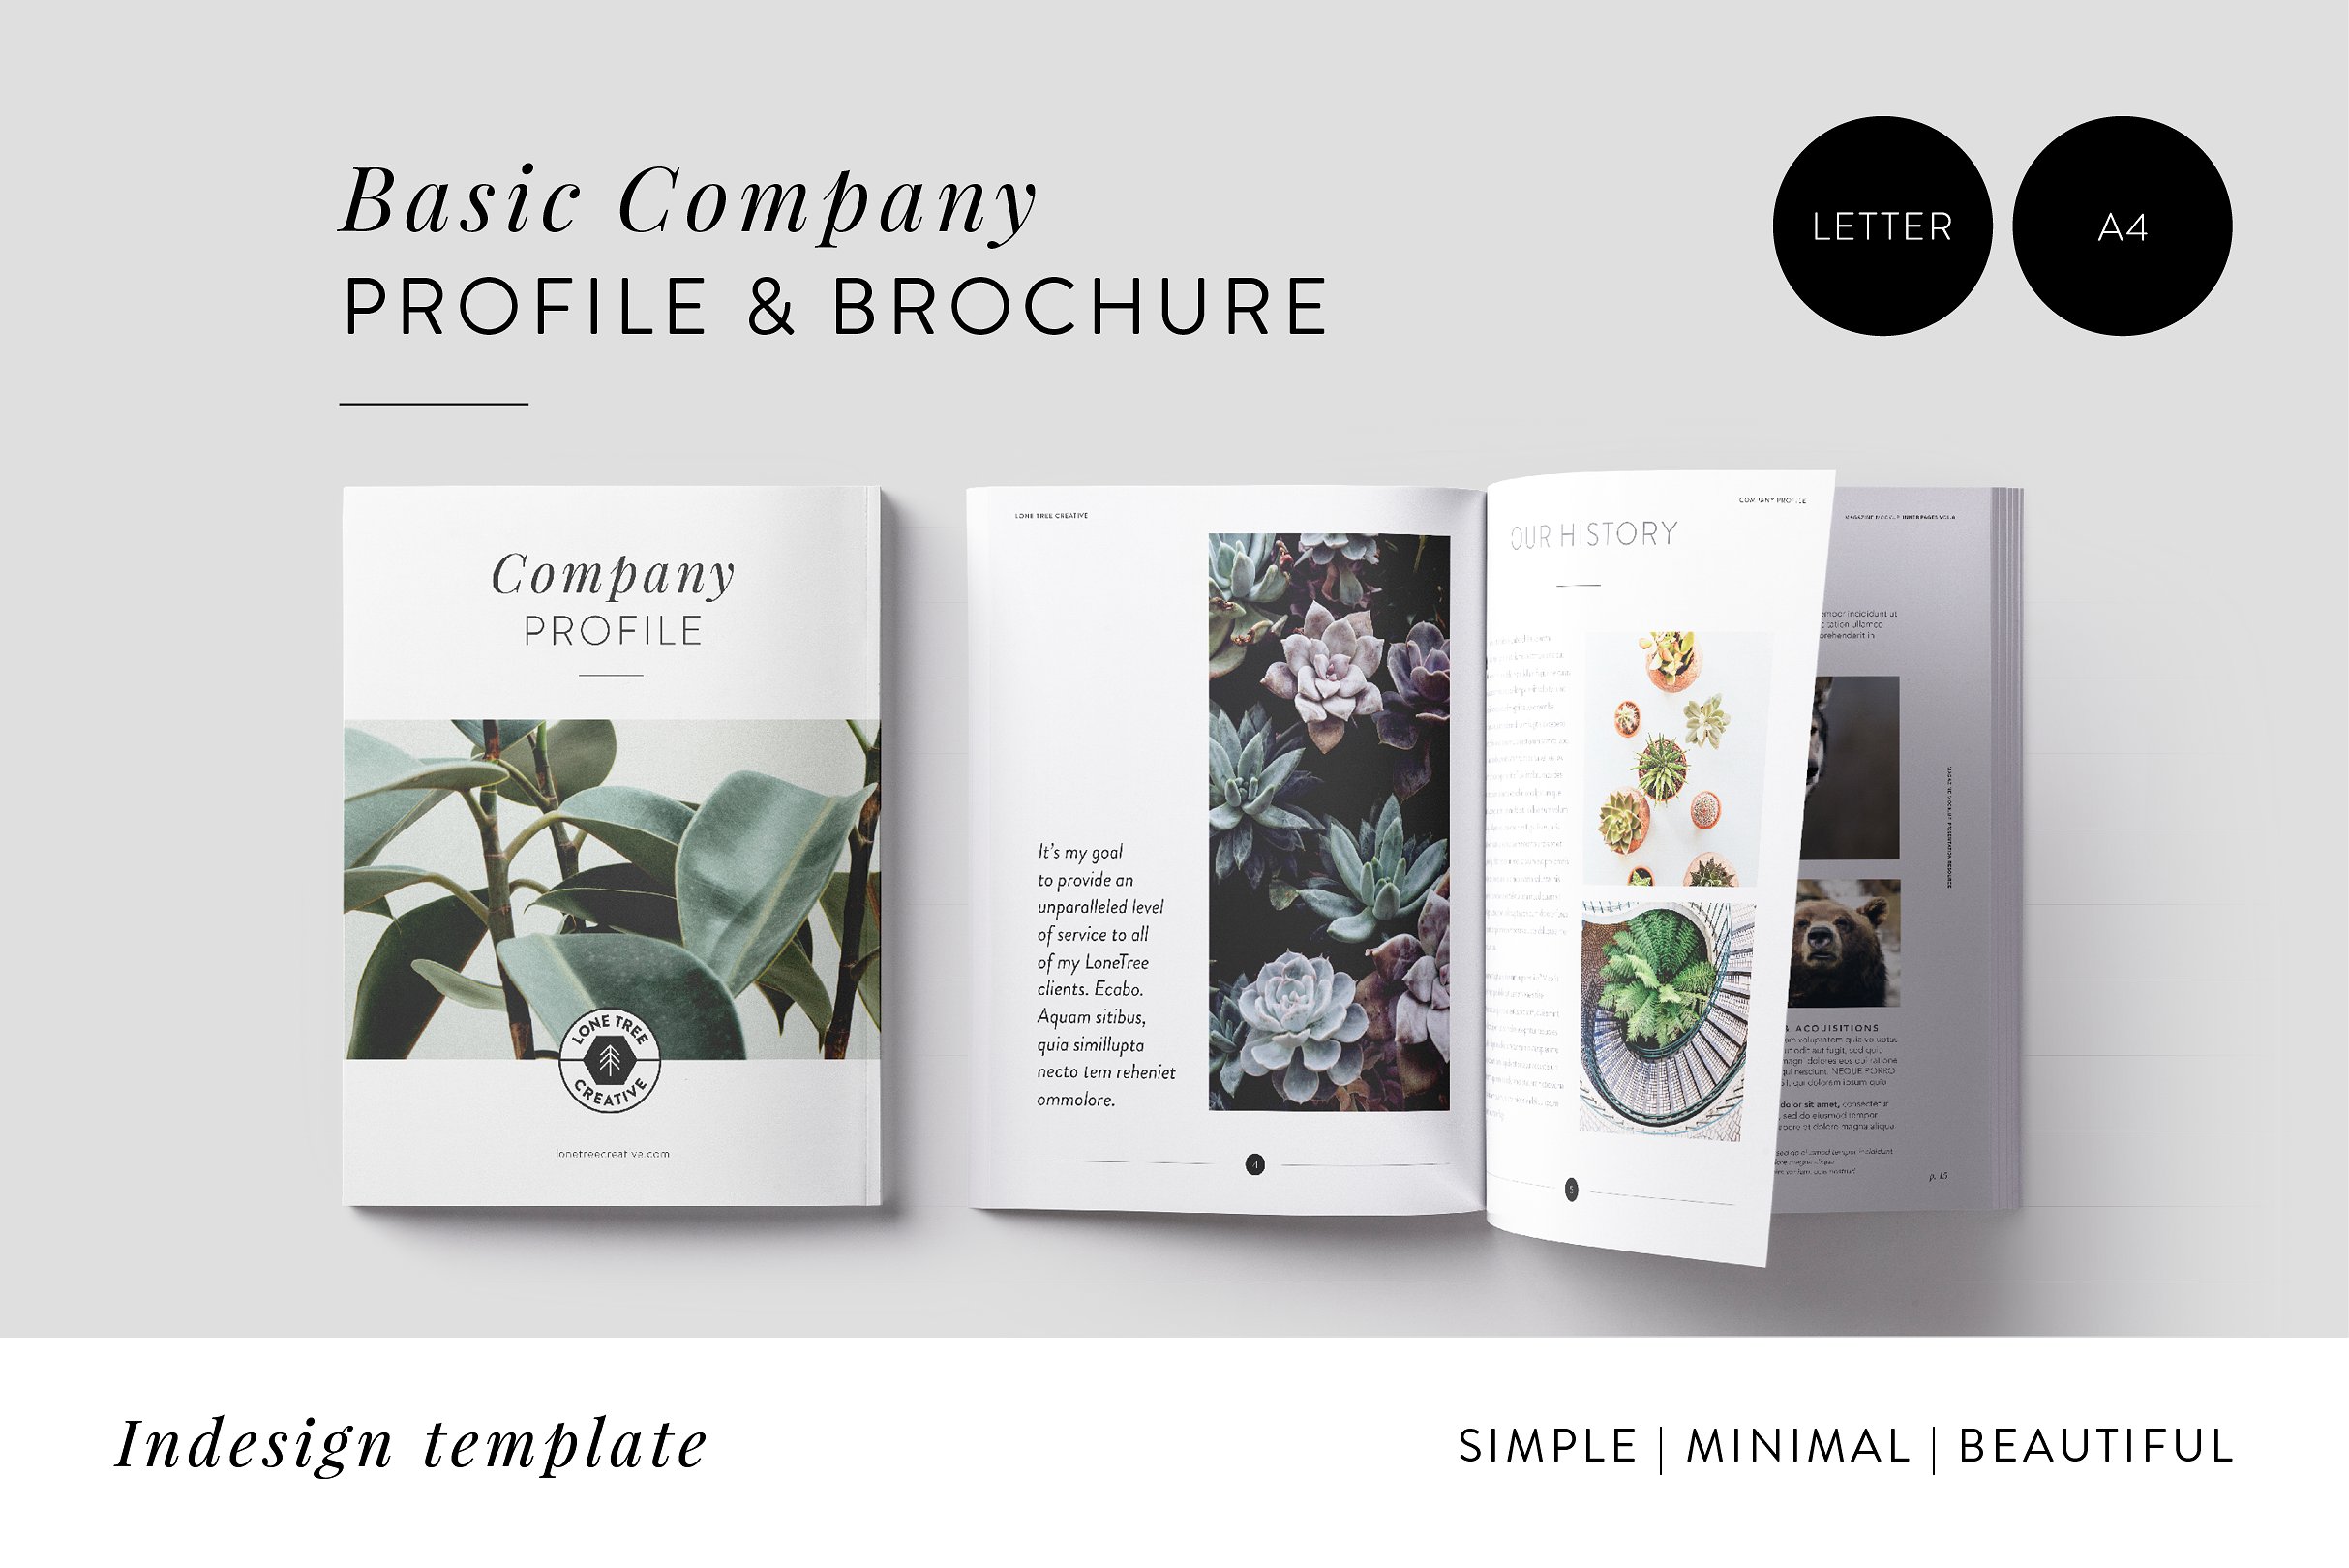 时尚简约的摄影宣传册模板 Minimal Company Profile + Brochure插图